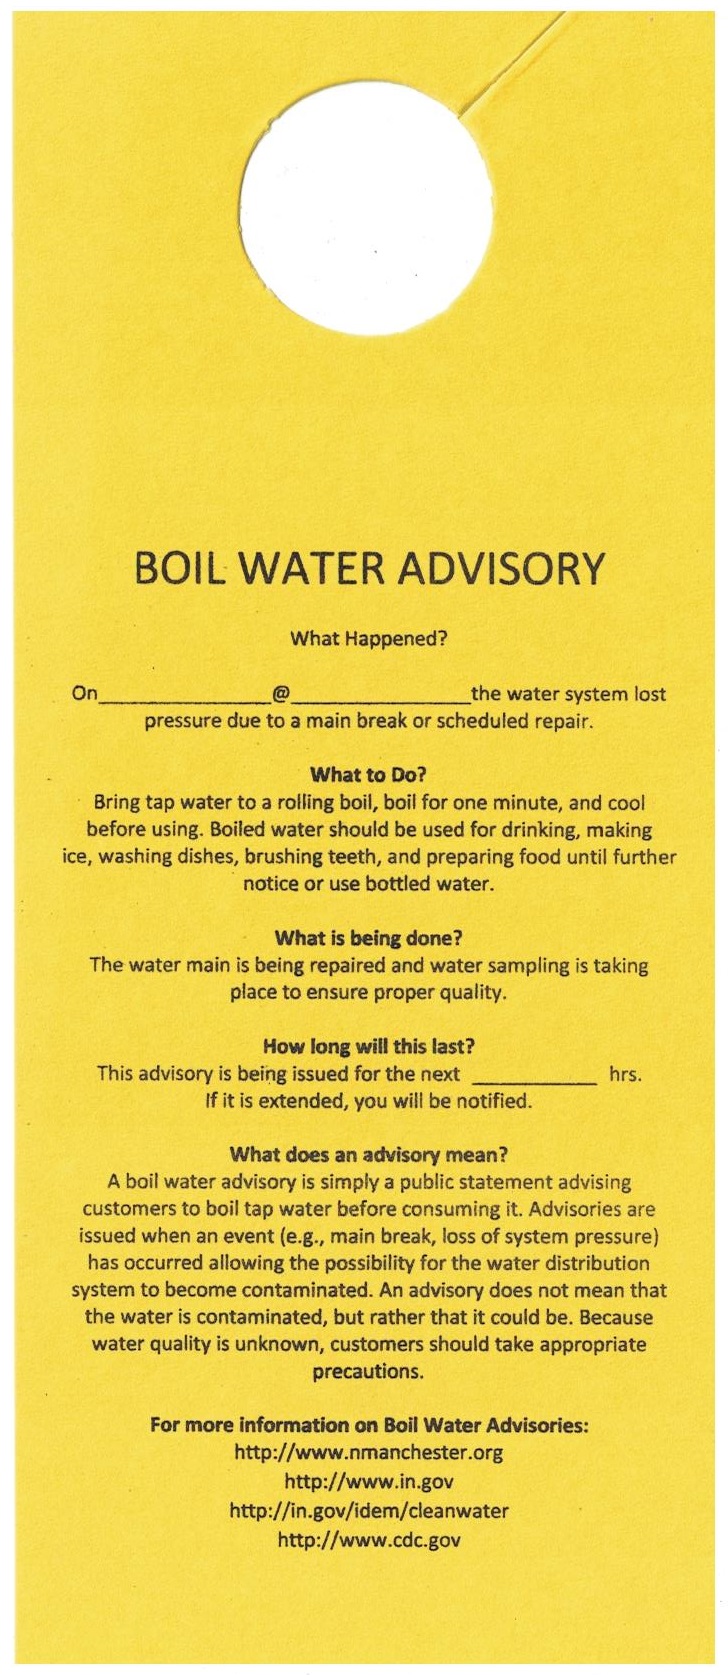 BOIL WATER ADVIRERY